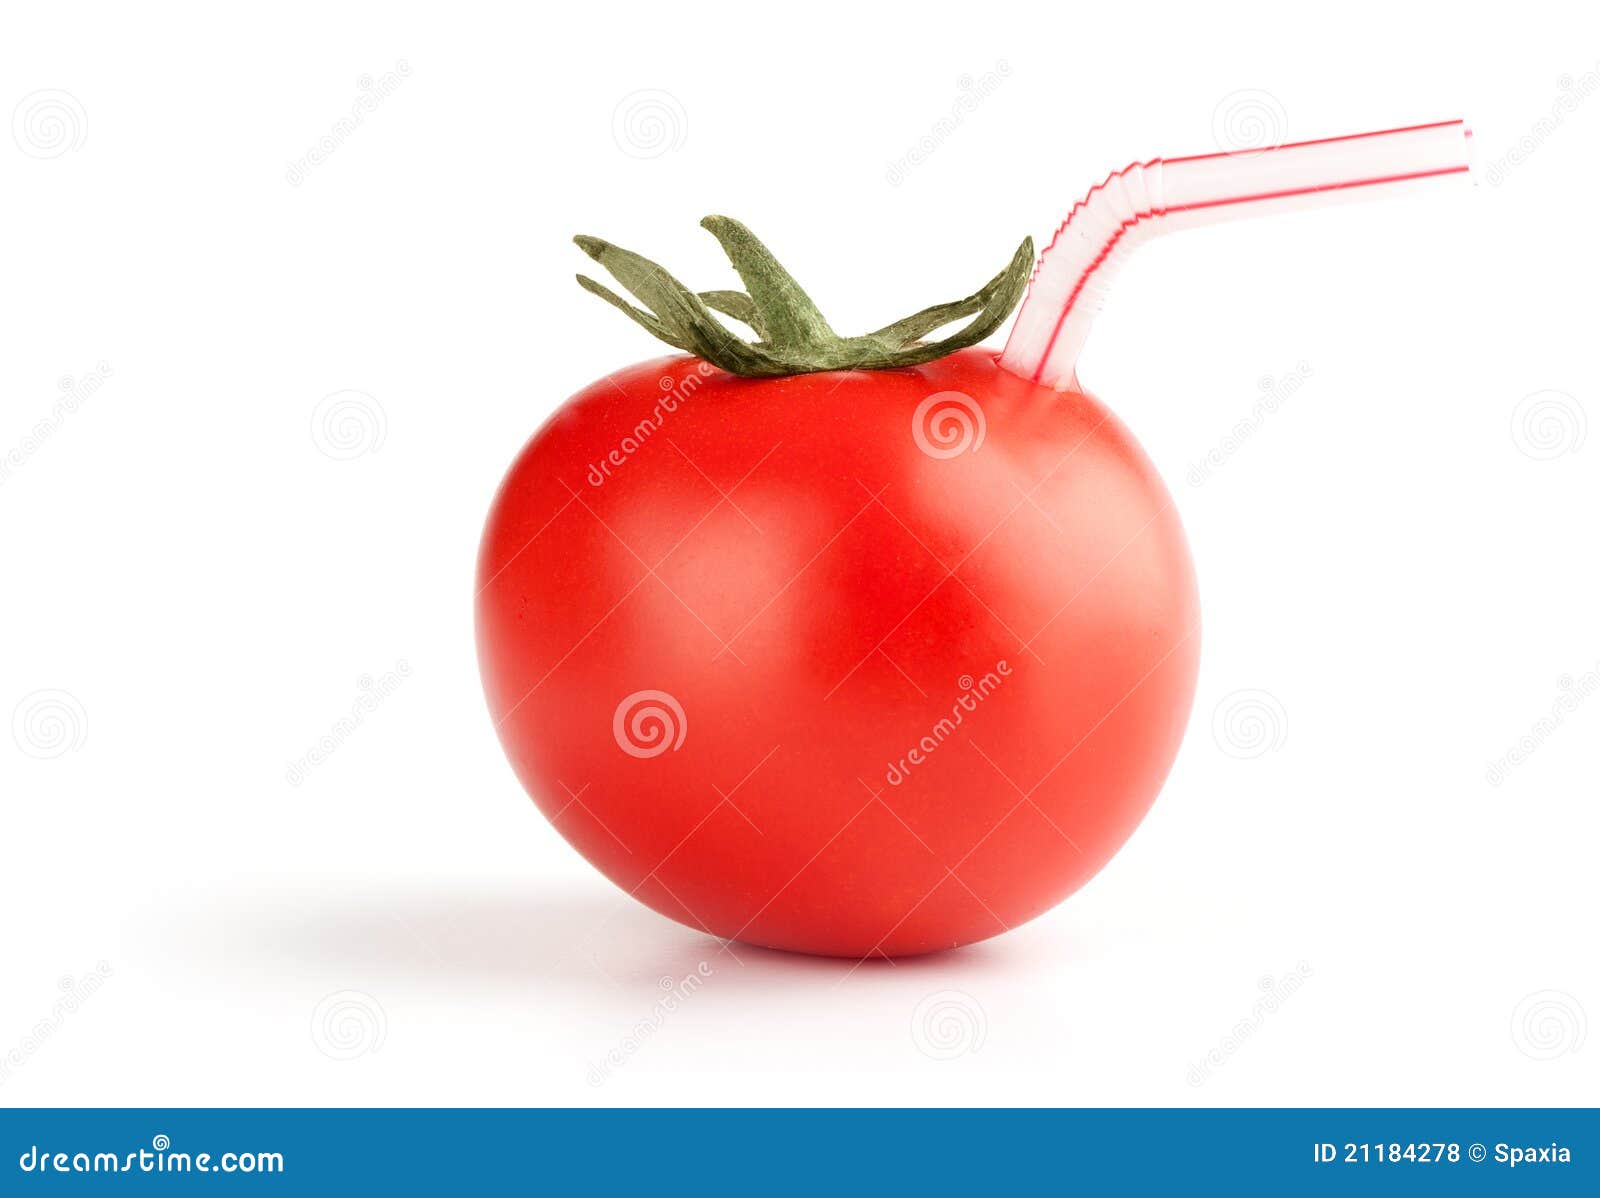 tomato juice clipart - photo #24